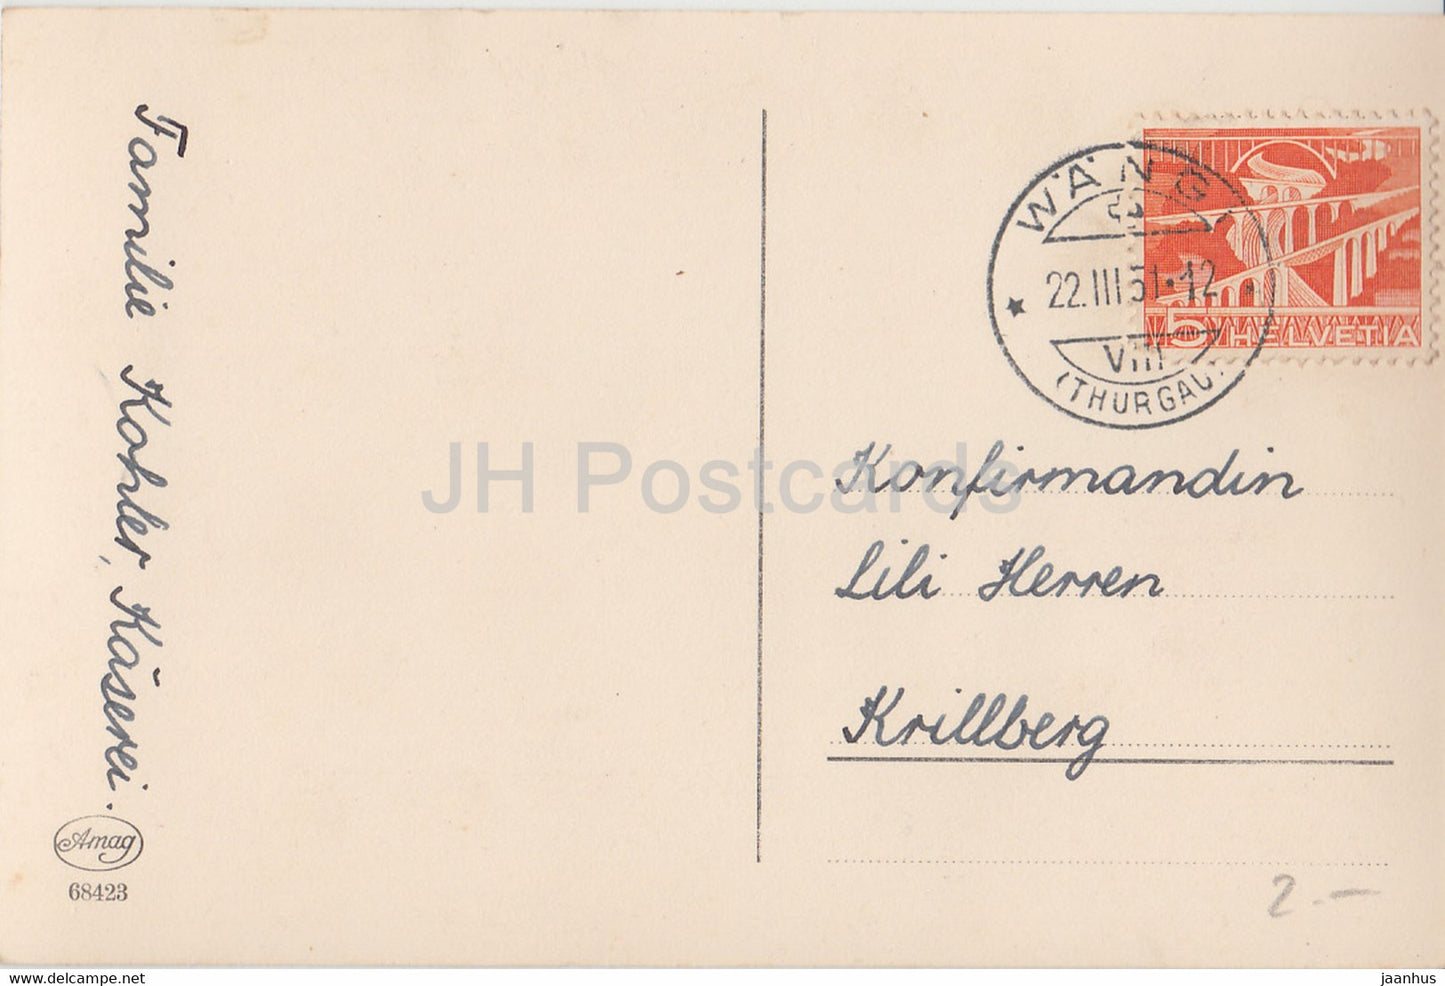 Greeting Card - Die Besten Gluckwunsche zur Konfirmation - carnation - flowers - 1951 - old postcard - Germany - used